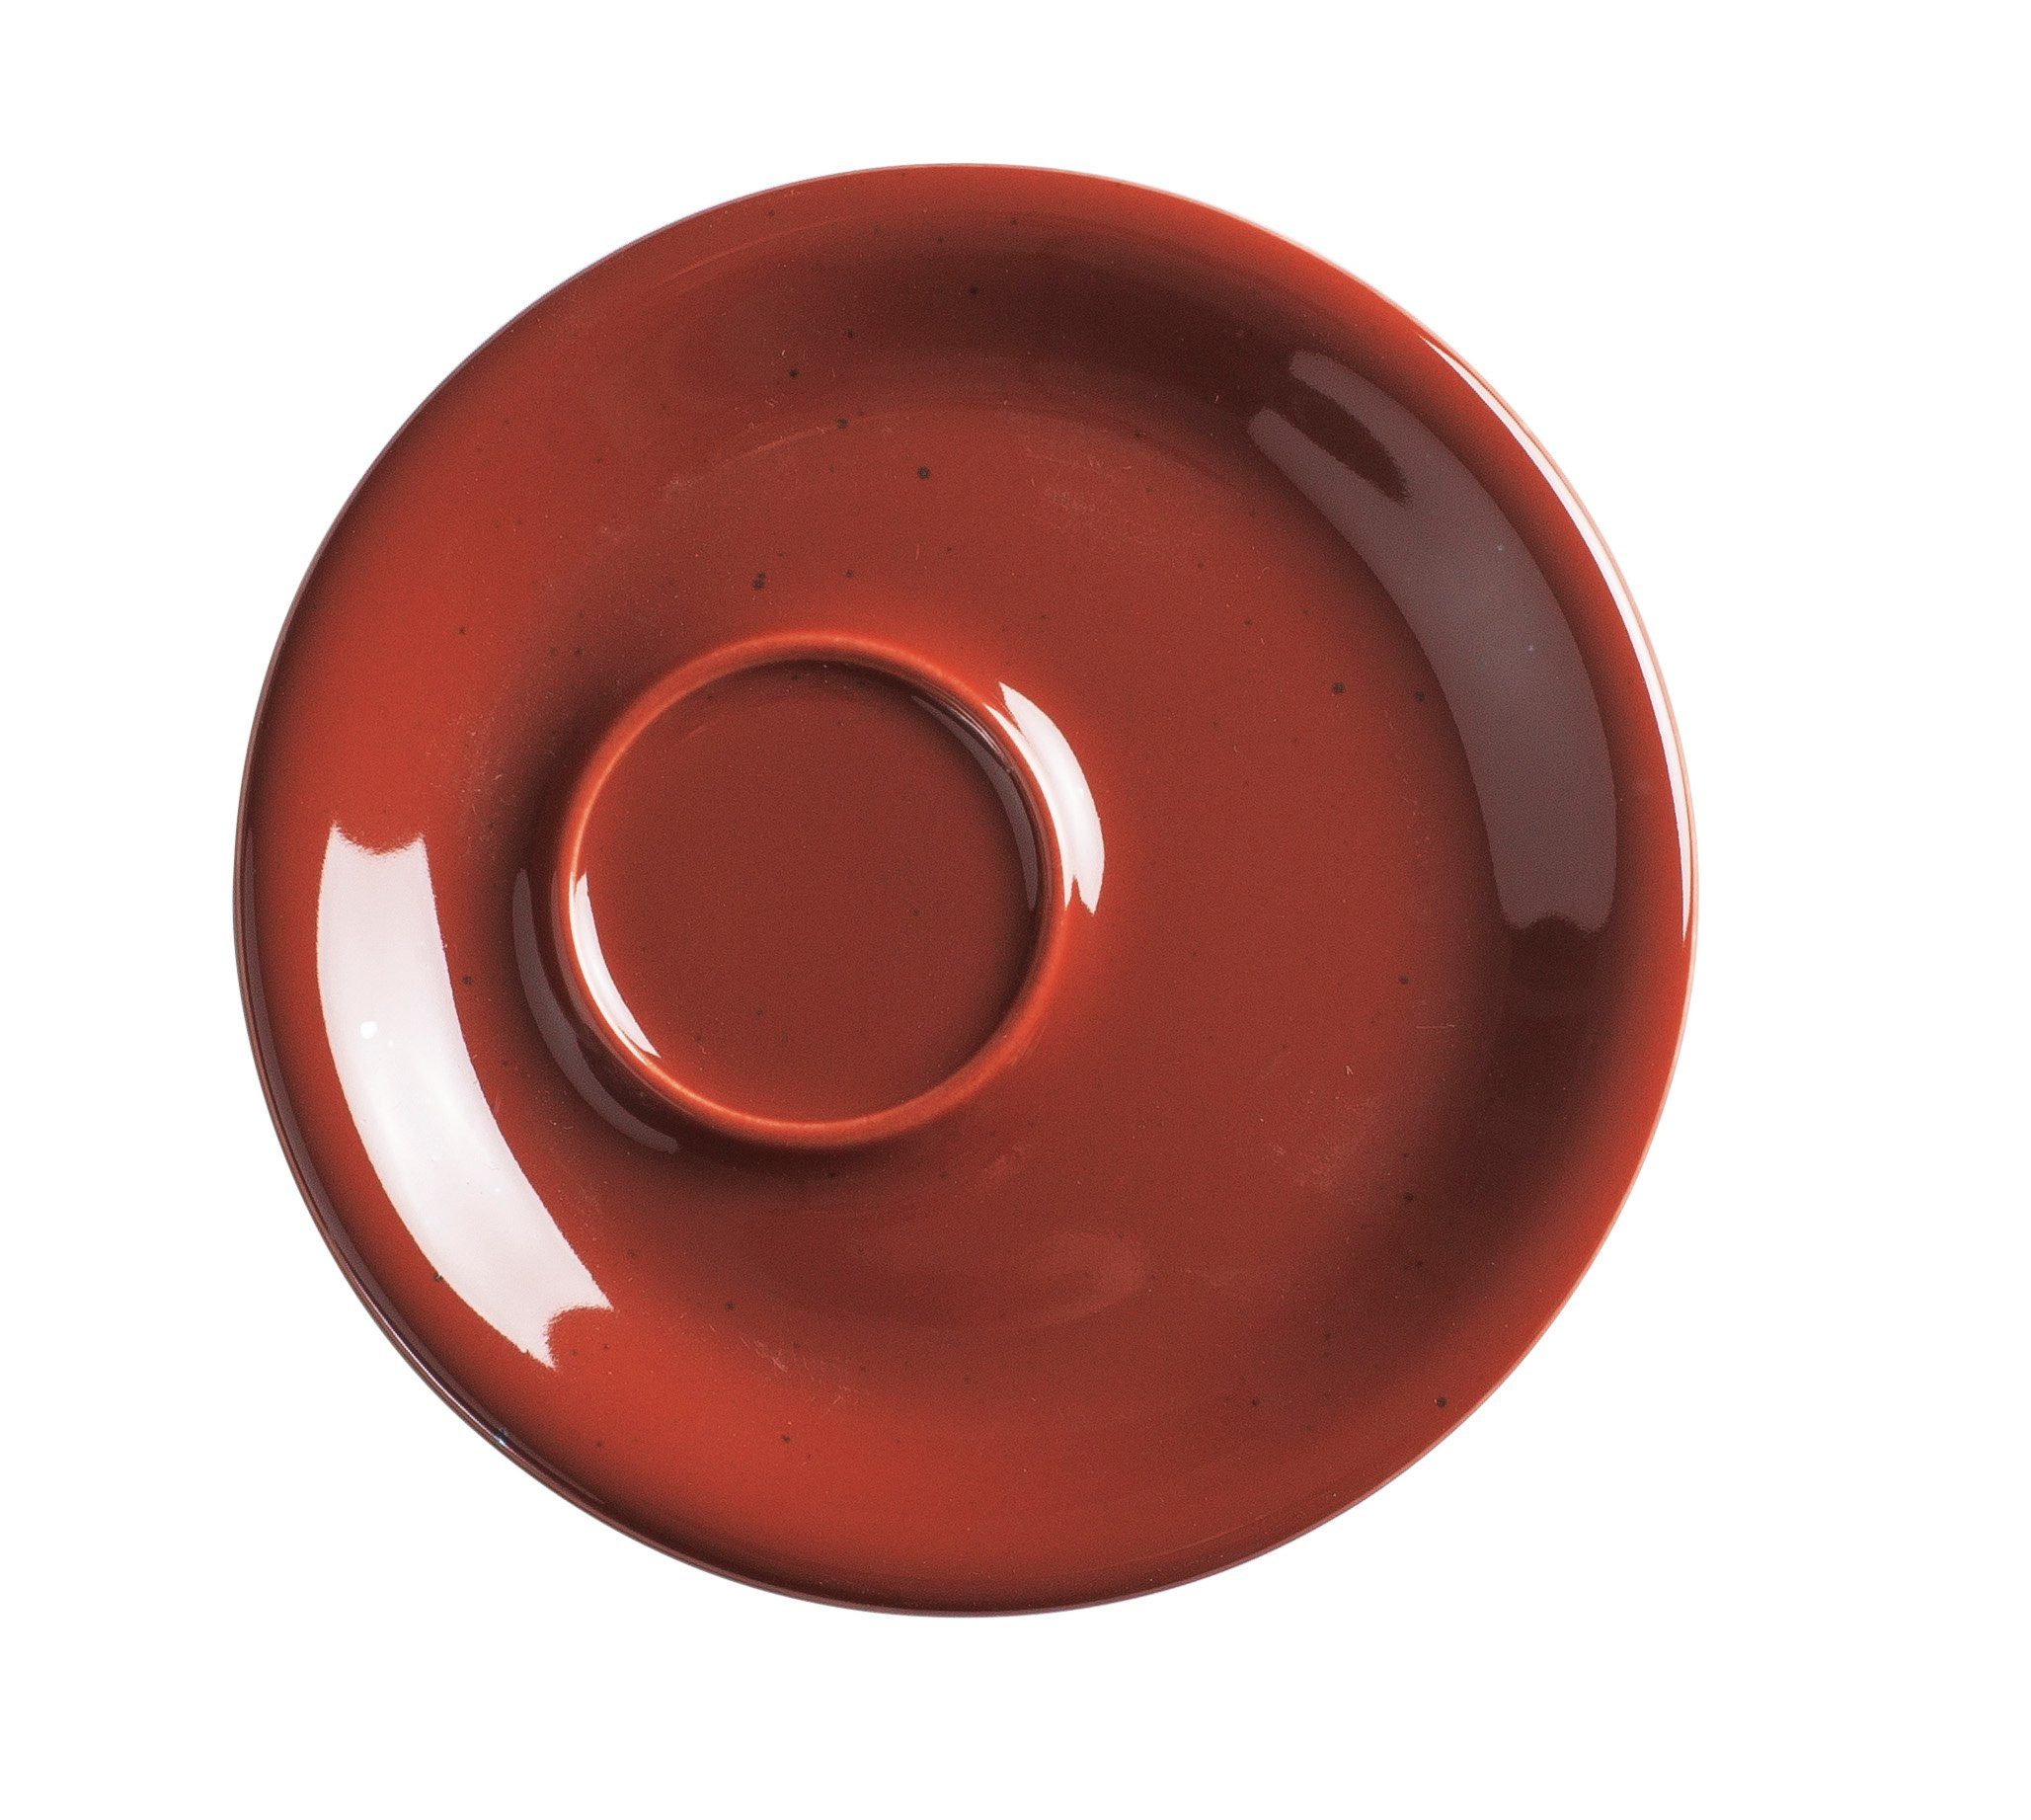 Kahla Untertasse Homestyle 16 cm, Handglasiert, Made in Germany siena red